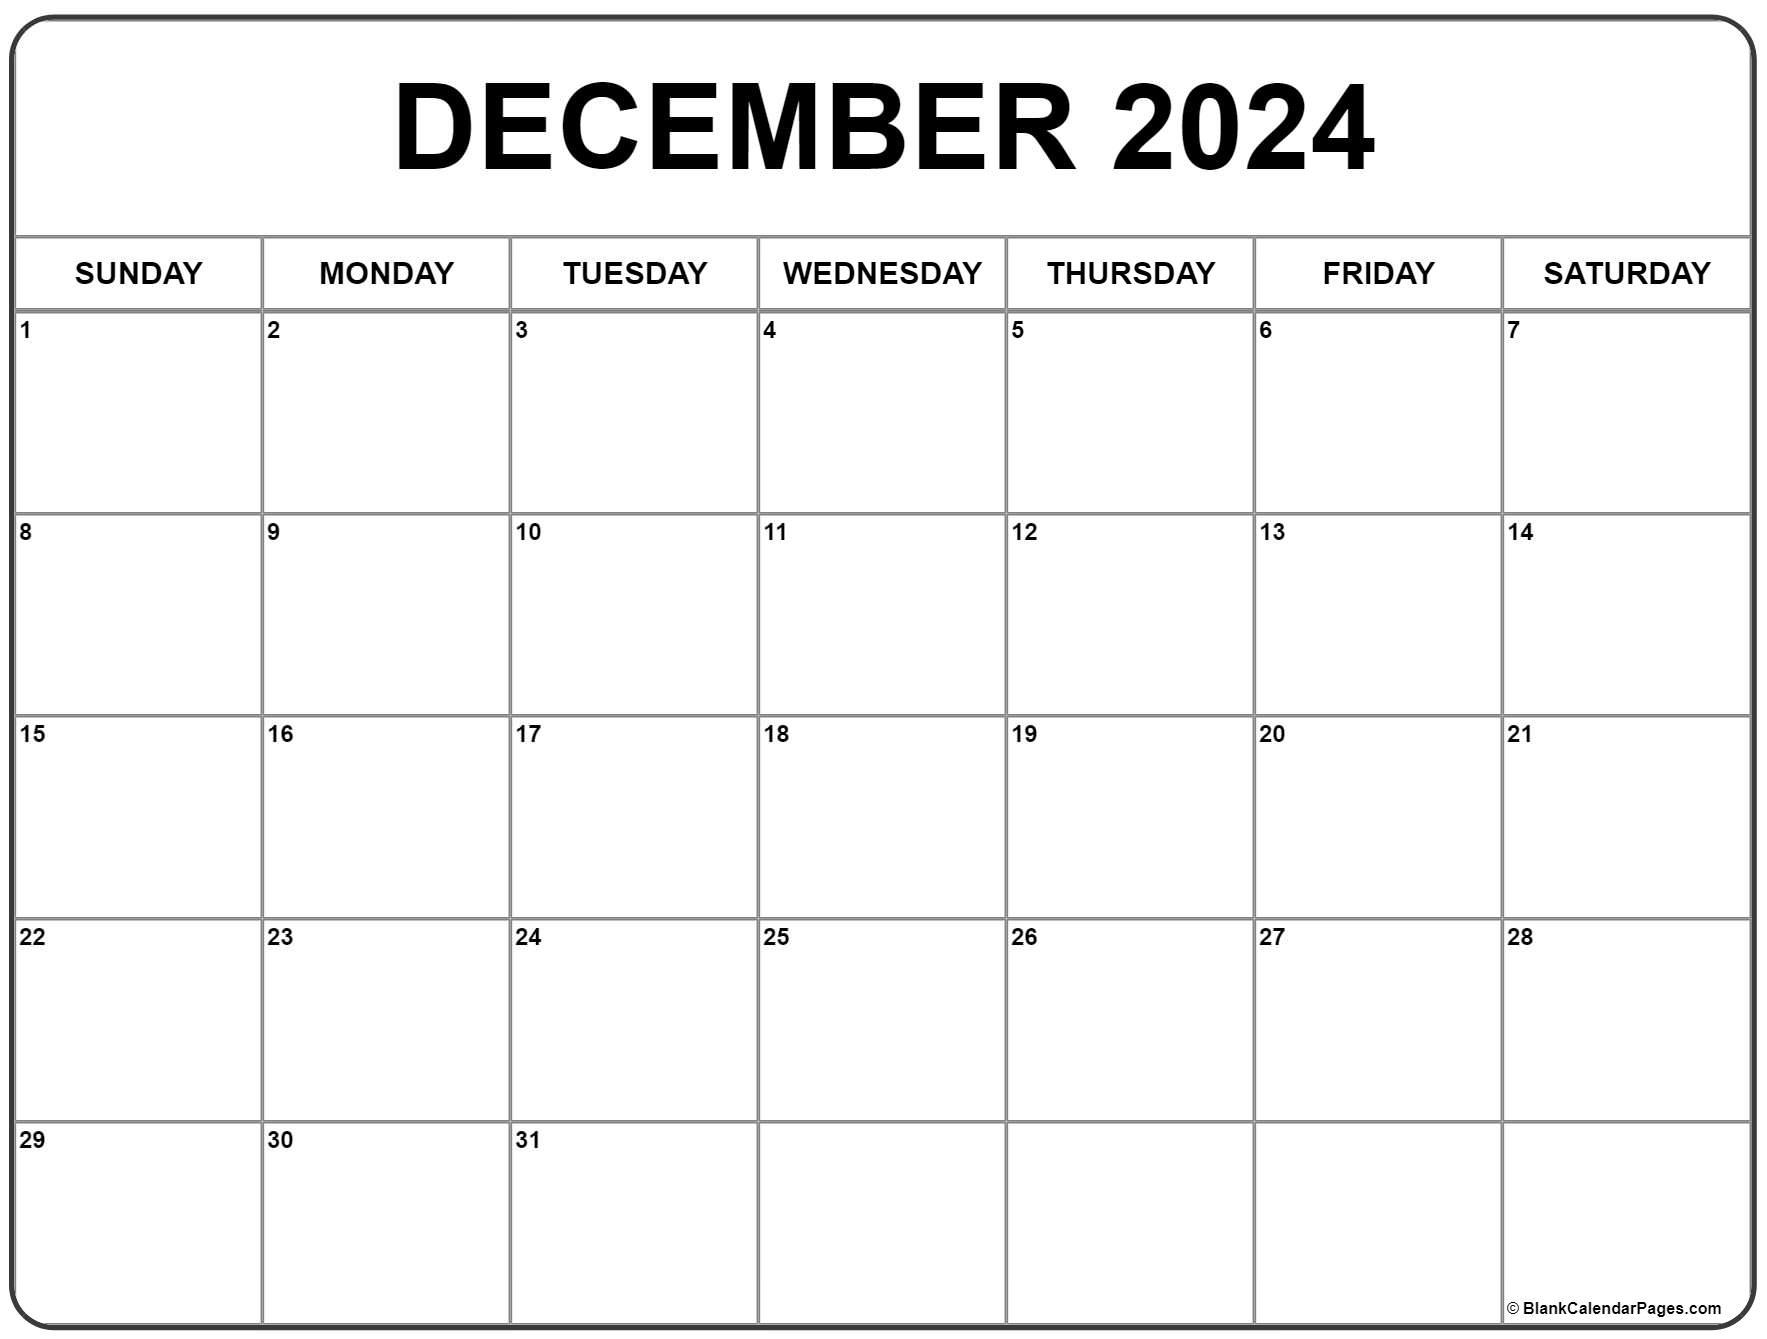 December 2024 Calendar | Free Printable Calendar for Free December 2024 Printable Calendar